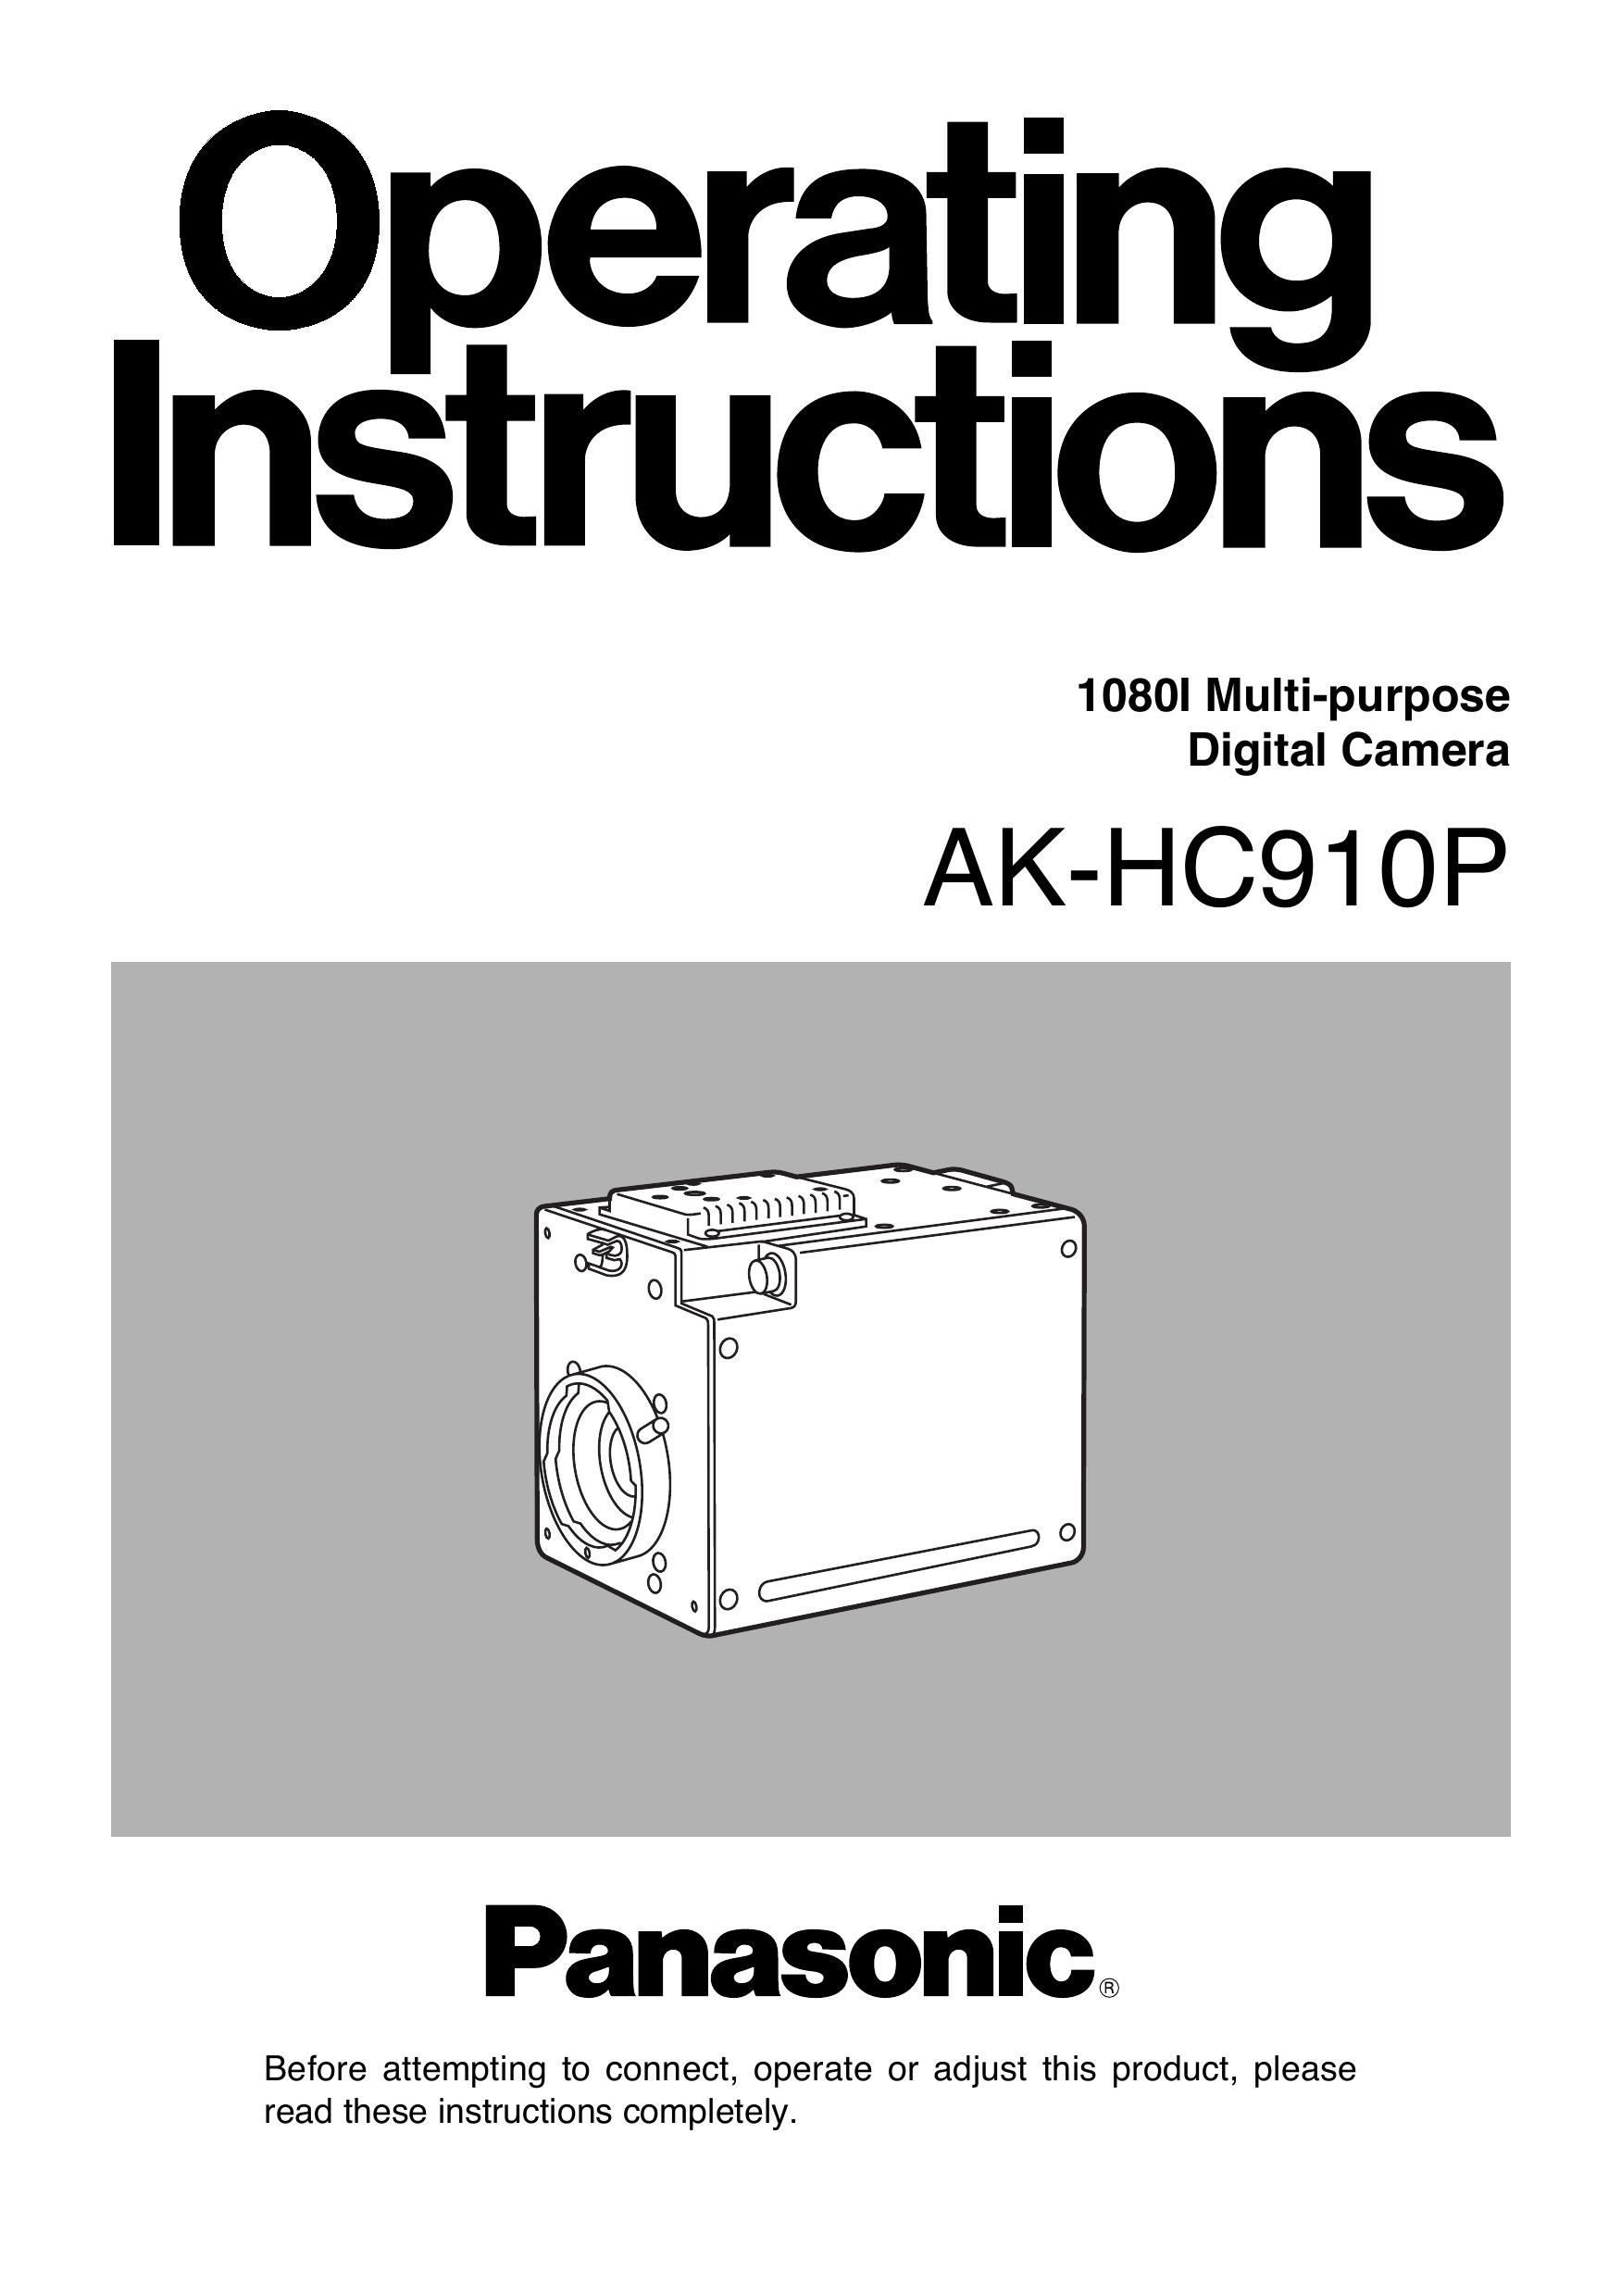 Panasonic AK-HC910P Digital Camera User Manual